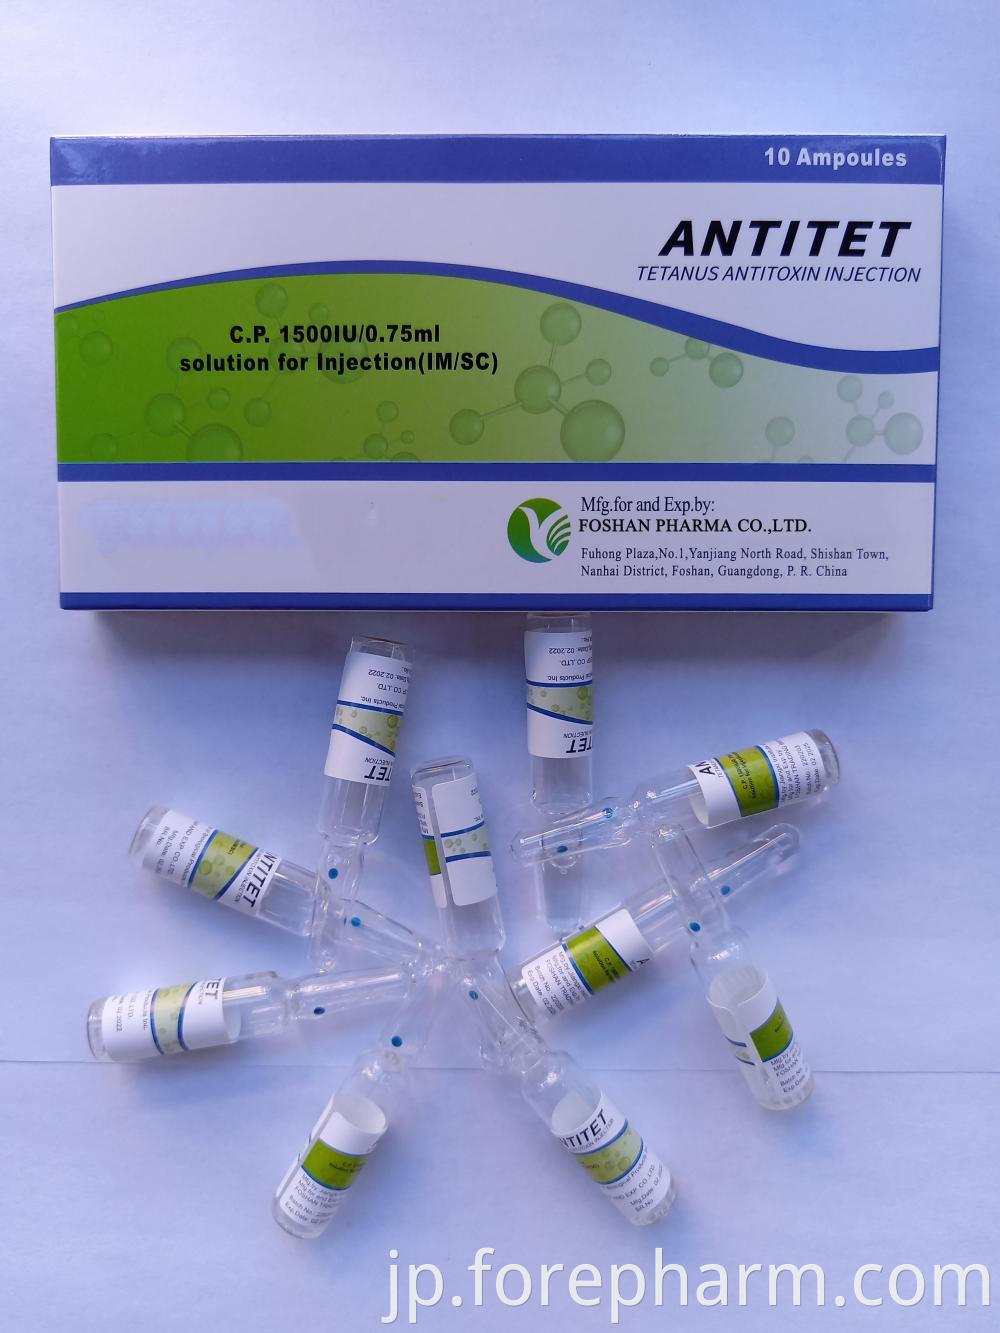 Tetanus Antitoxin